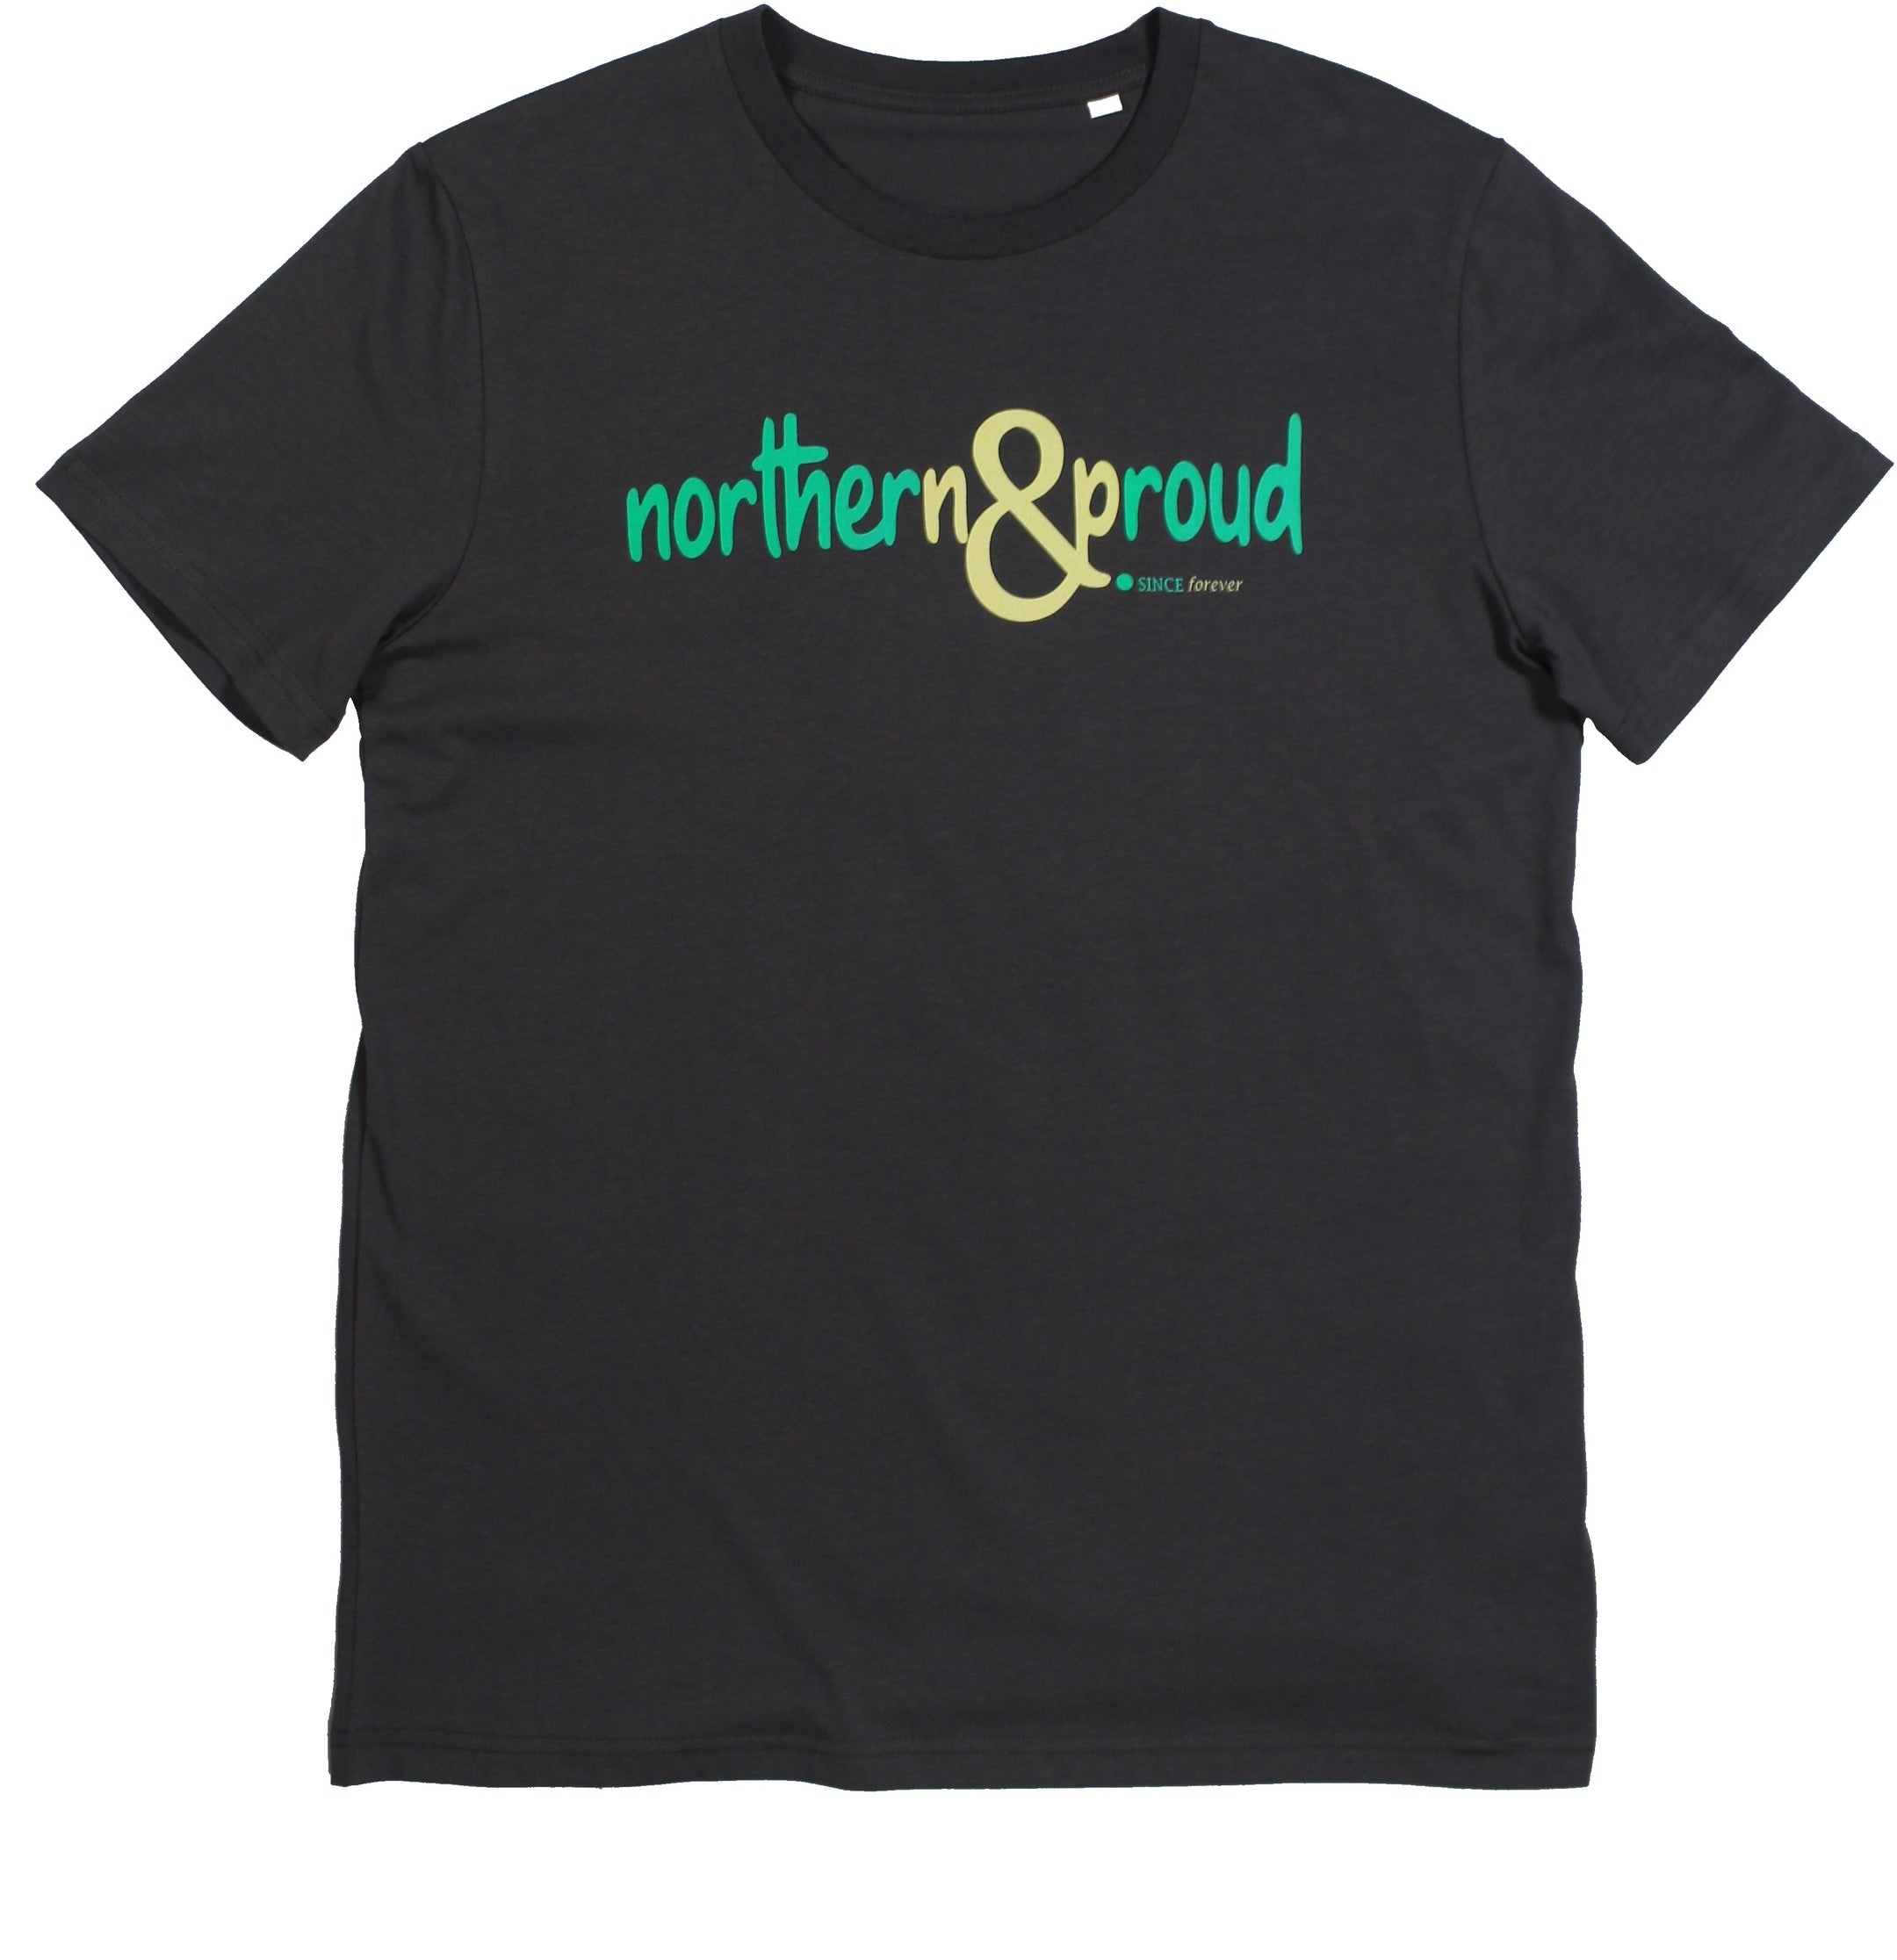 Northern & Proud Organic Cotton T-Shirt